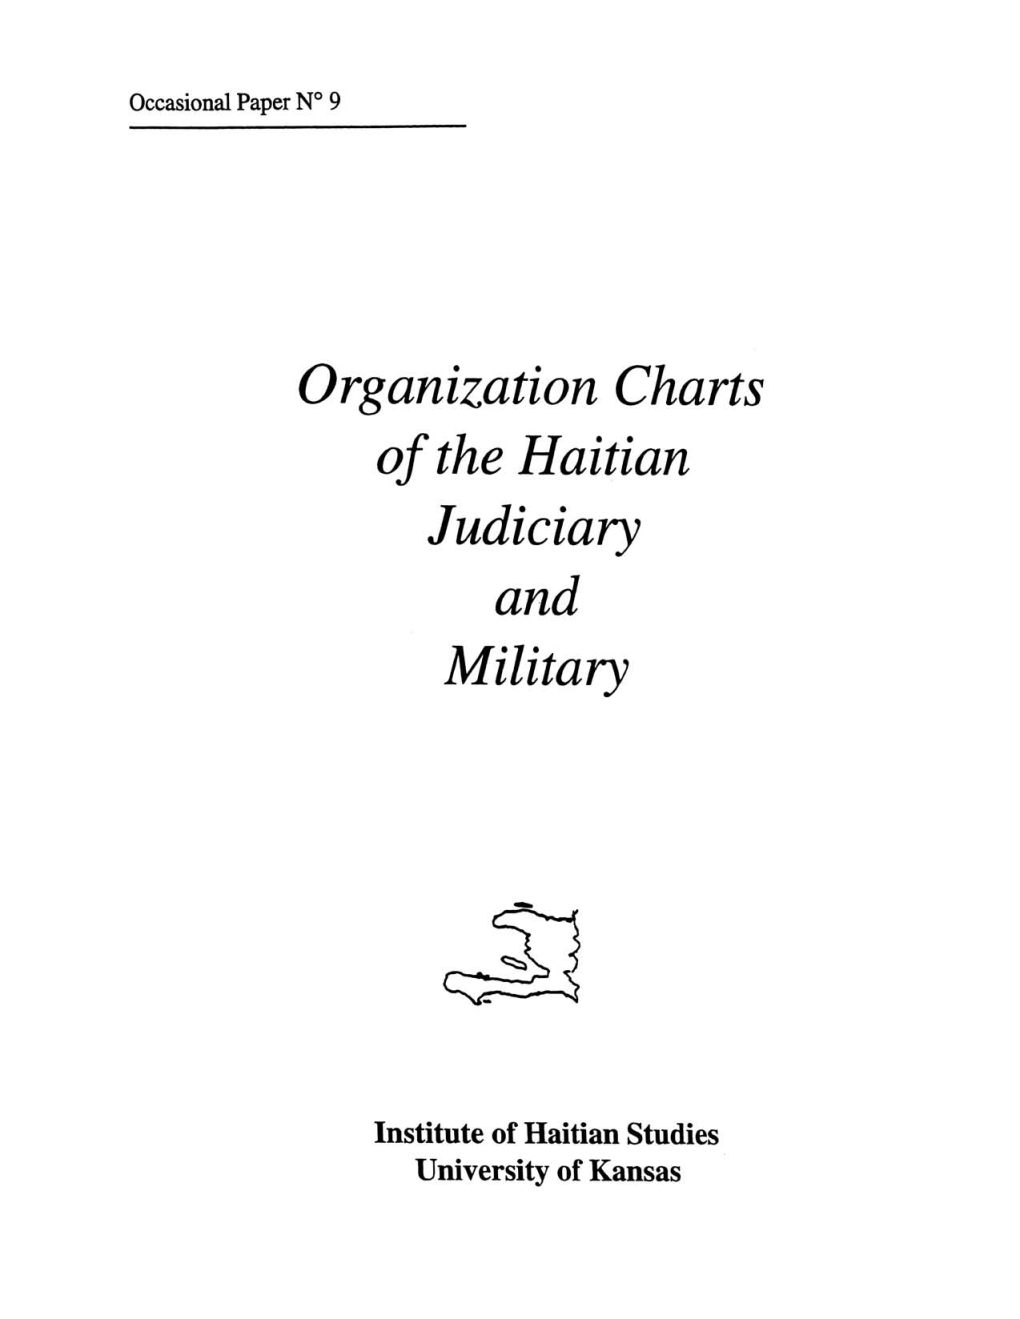 Organization Charts of the Haitian Judiciary and Military